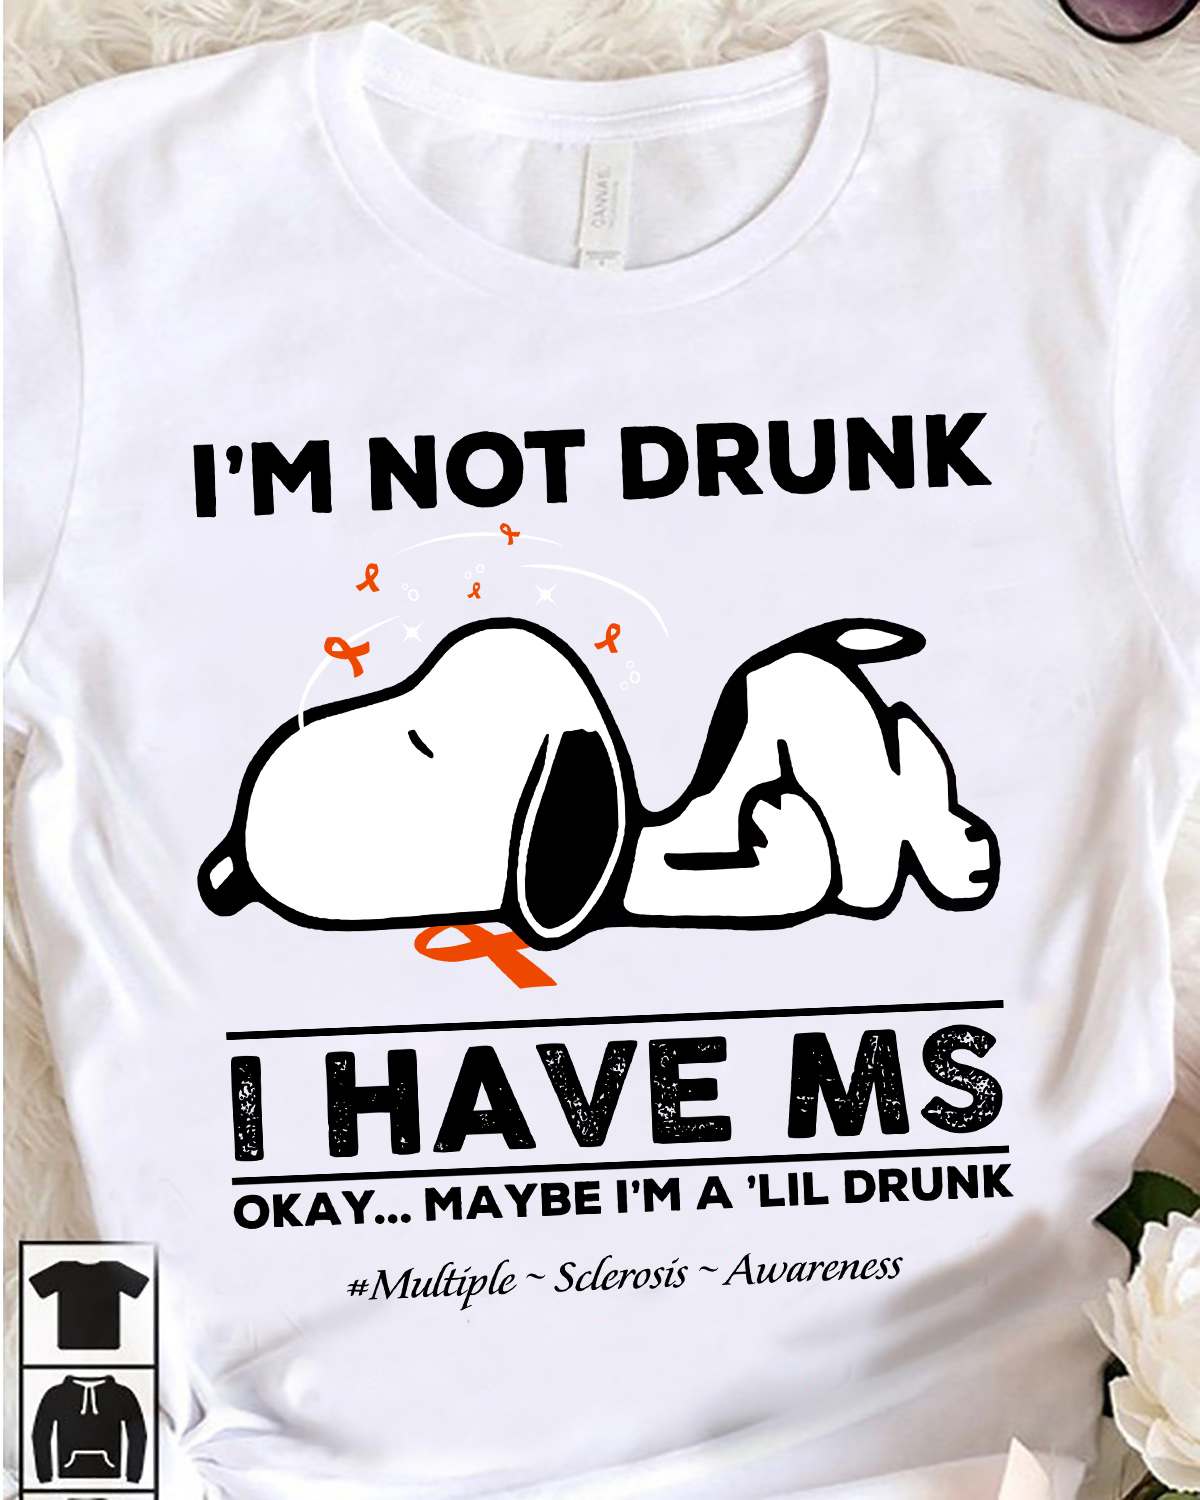 I'm not drunk I have multiple sclerosis okay maybe I'm a lil drunk - Multiple sclerosis awareness